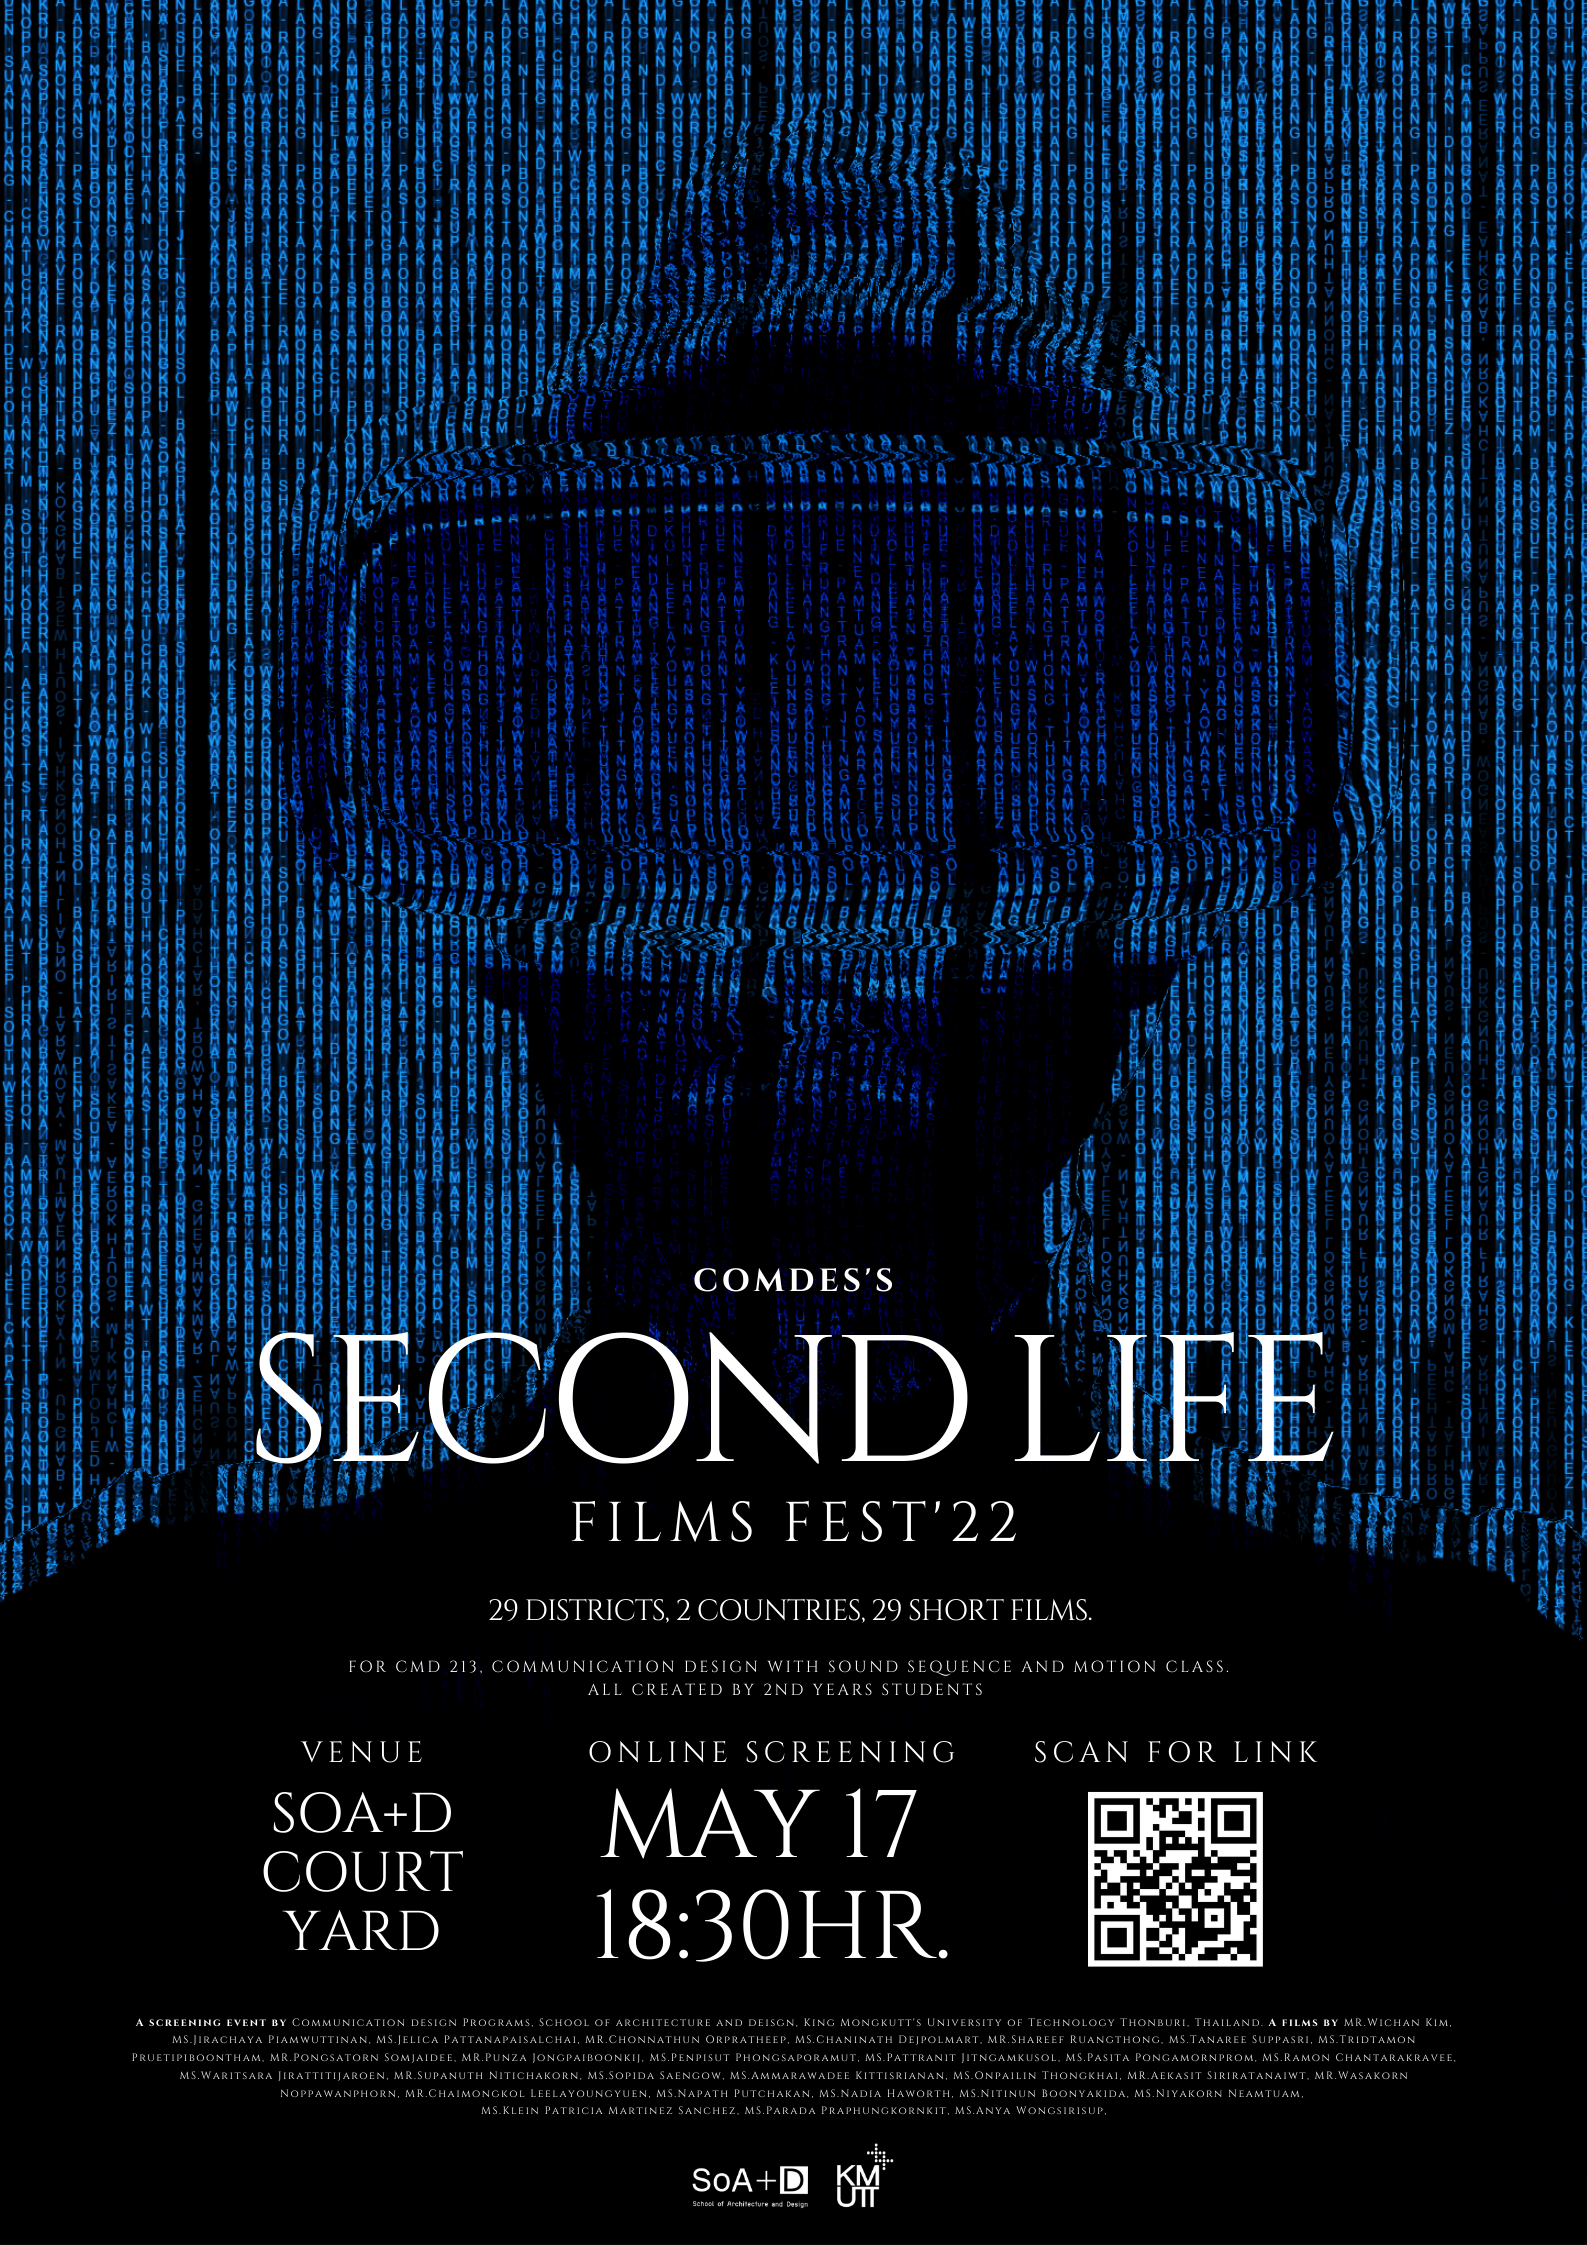 Comdes’s : Second life films festival ‘22